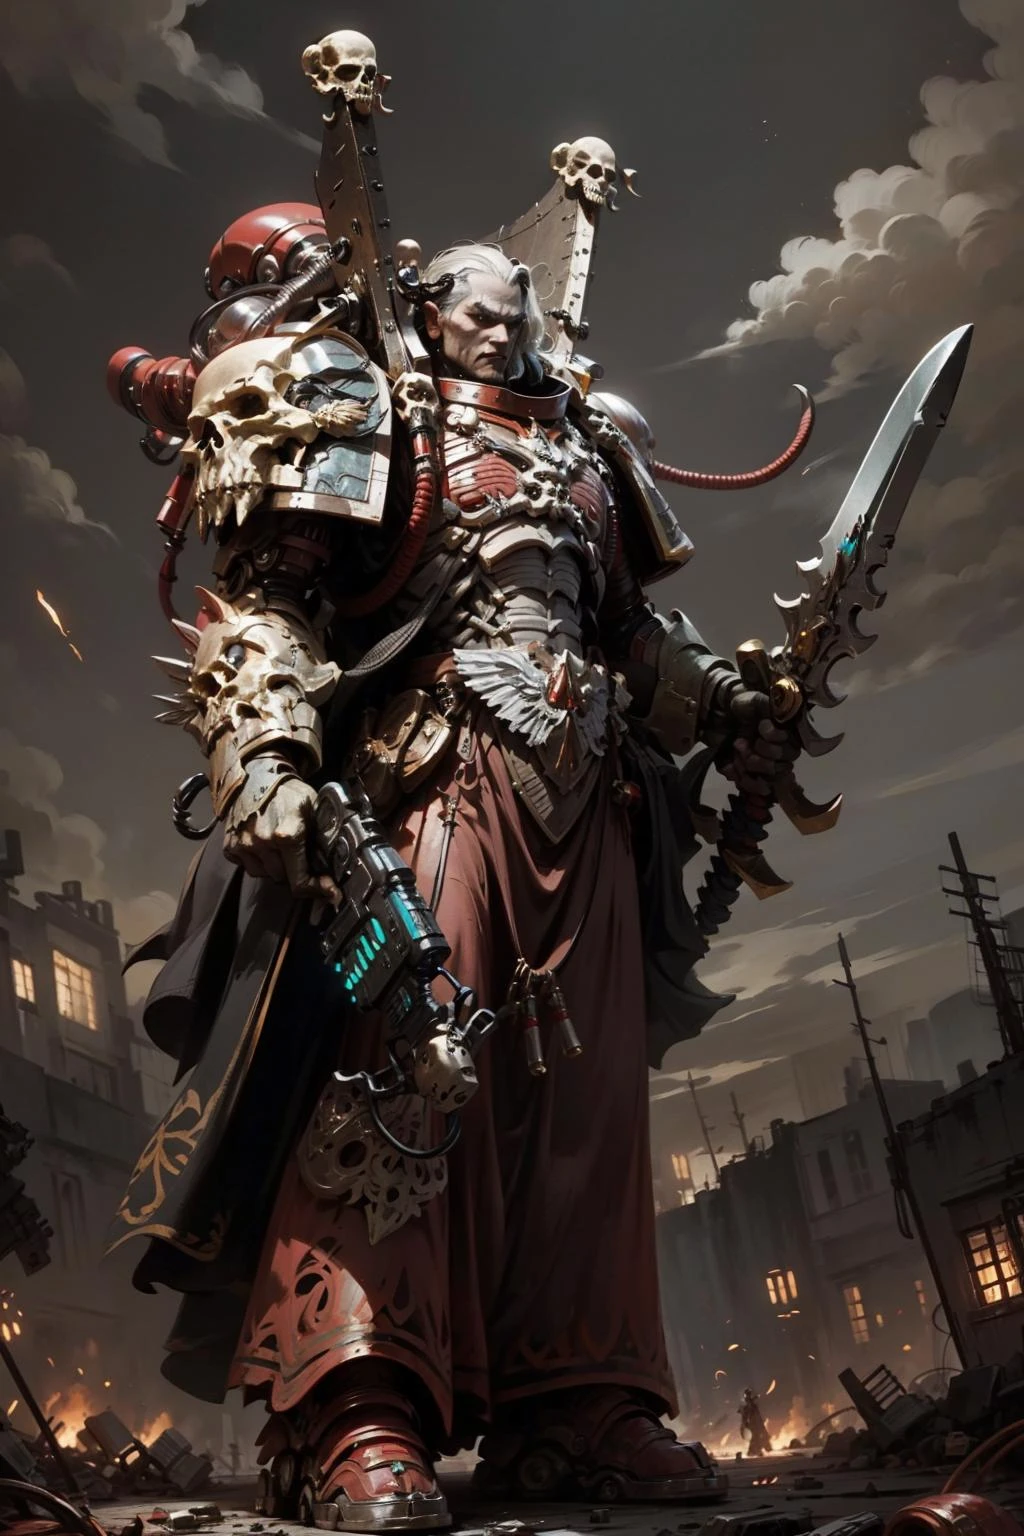 Photo of mephiston in a desolate landsแหลม with long platinum hair wearing intricate ornamented metallic armor, ด้วยกระโหลกกระโหลก, แหลม, แท็บ, มือขวาถือดาบขนาดใหญ่, มือซ้ายของเขาถือปืน, รายละเอียดเอกสารแนบไซเบอร์เนติกส์, หลอด, สายไฟ, ดวงตาที่เร่าร้อน,
เมืองที่พังทลายปรากฏอยู่แต่ไกล.
 